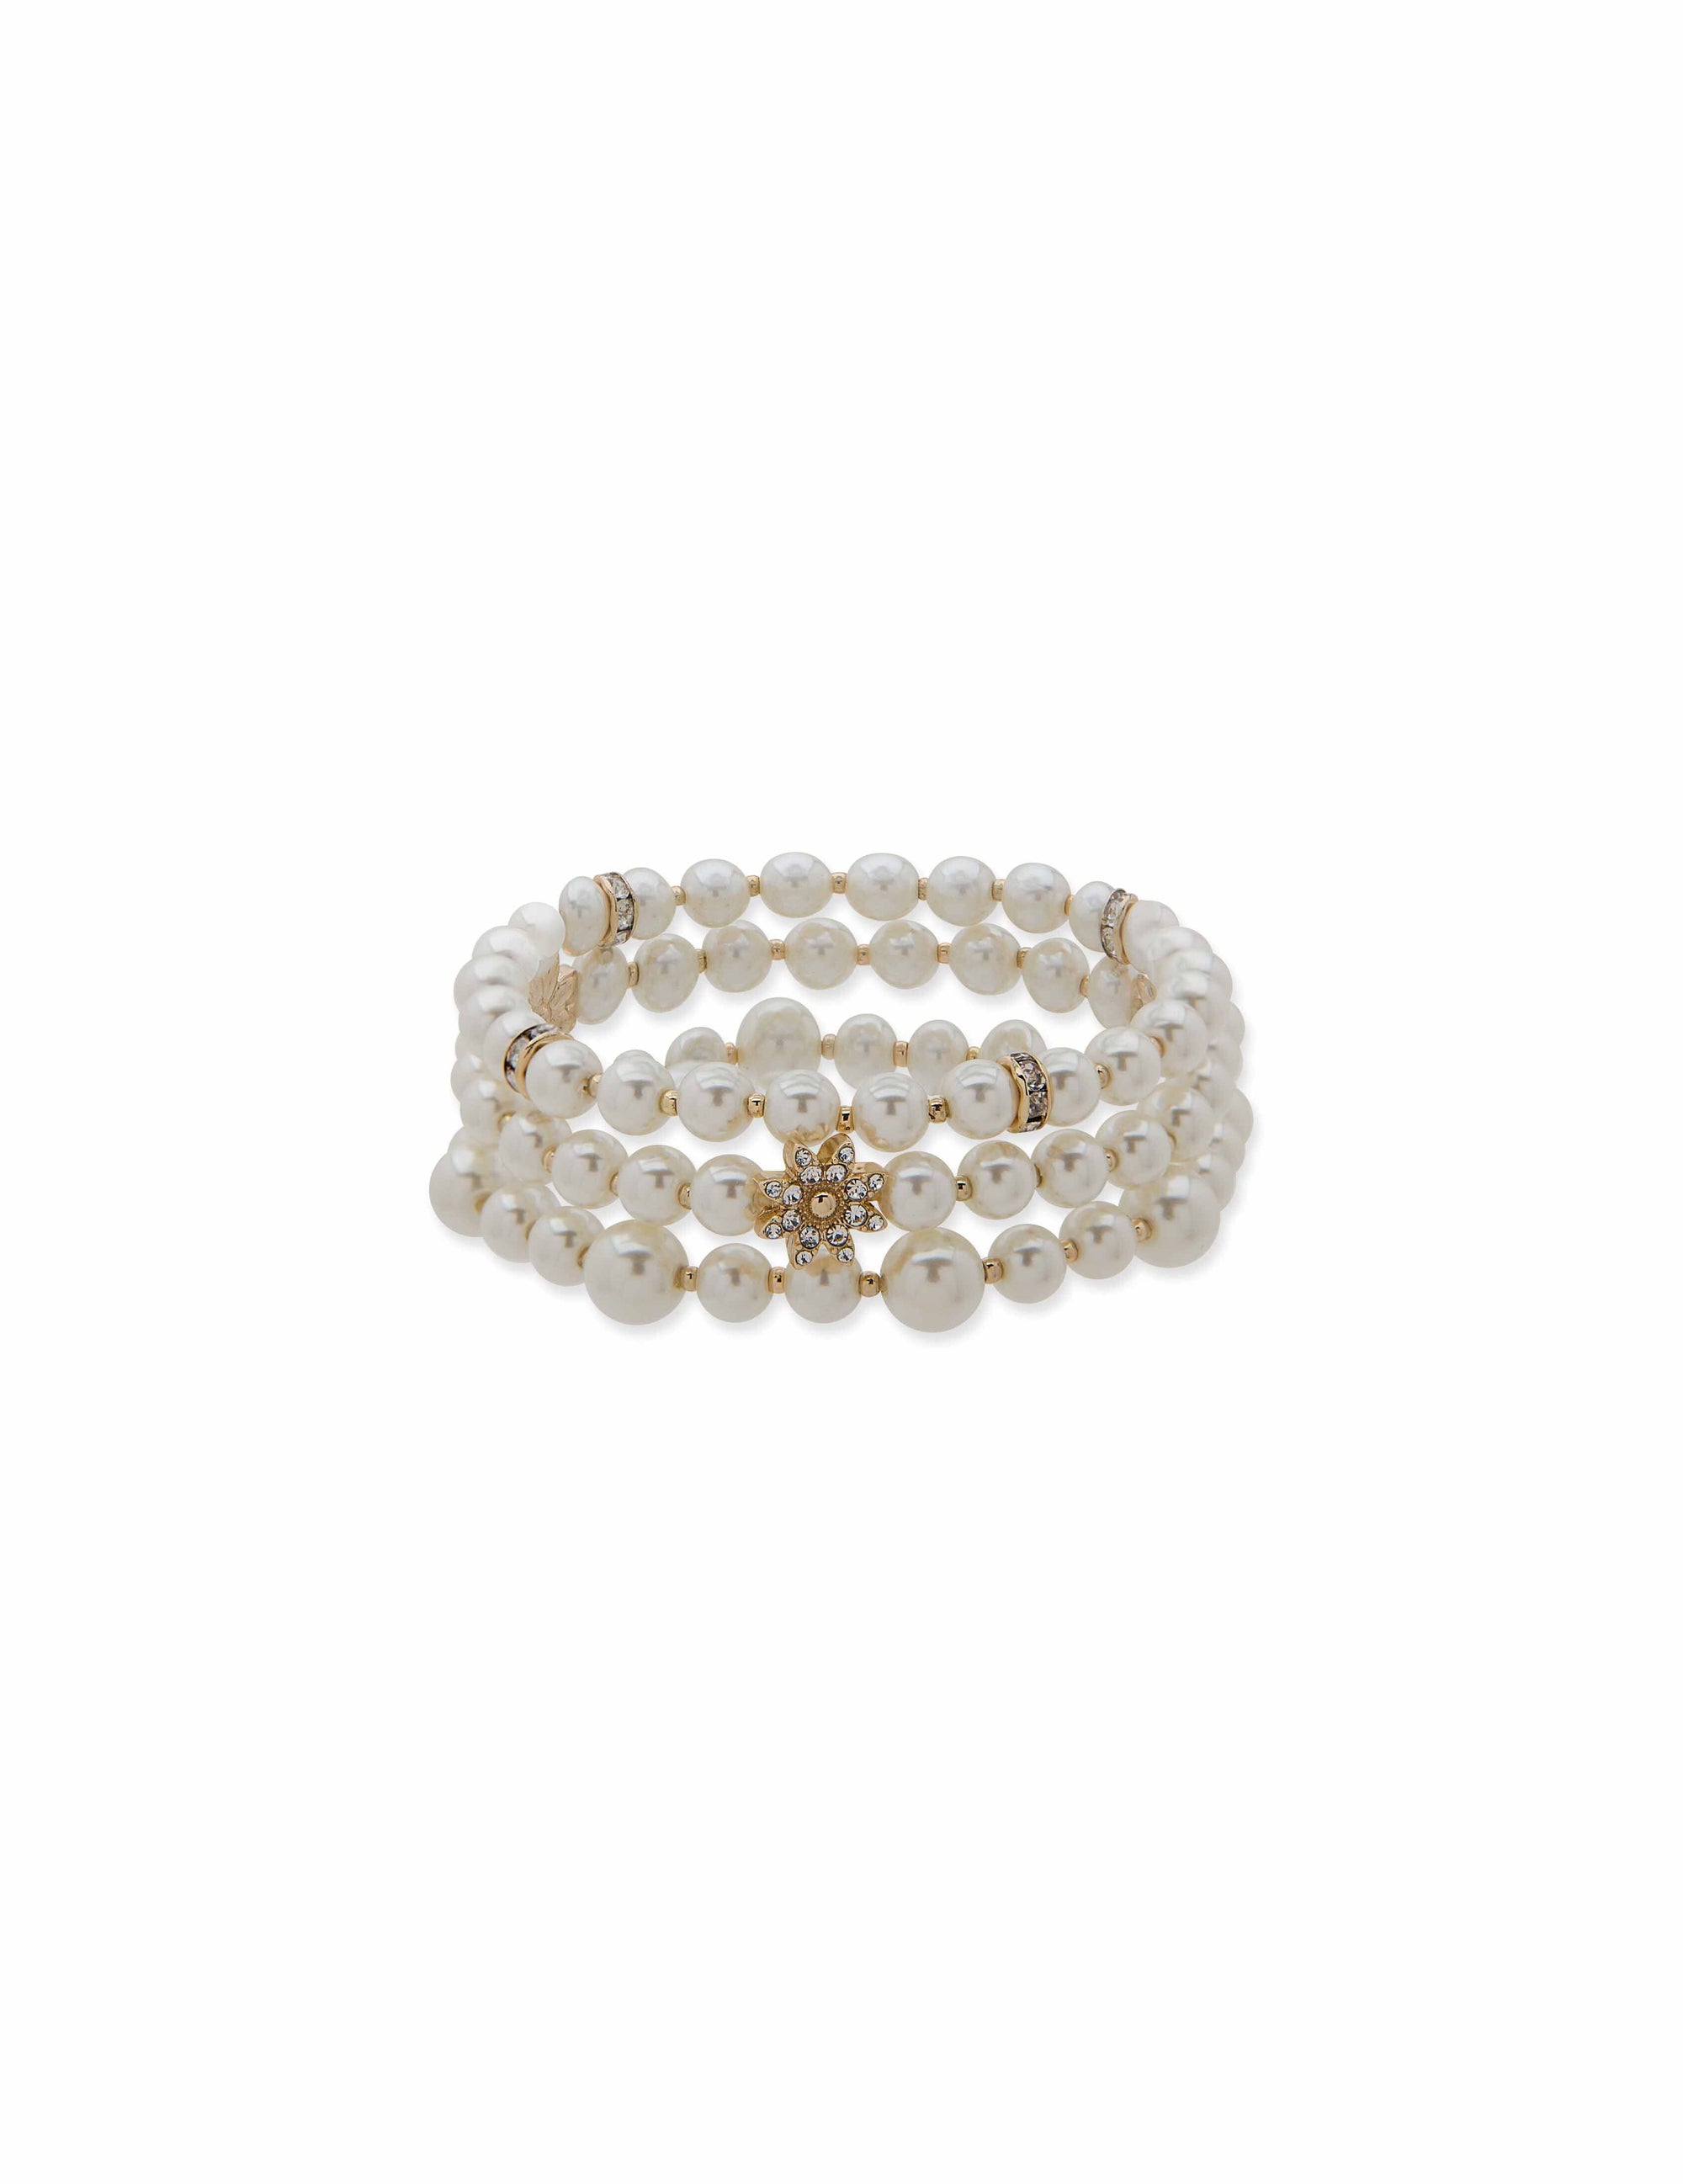 7-8/8-9mm Near-Round White Natural freshwater pearl bracelet design simple  silvery-Botton Women/girls jewelry Making Design - AliExpress